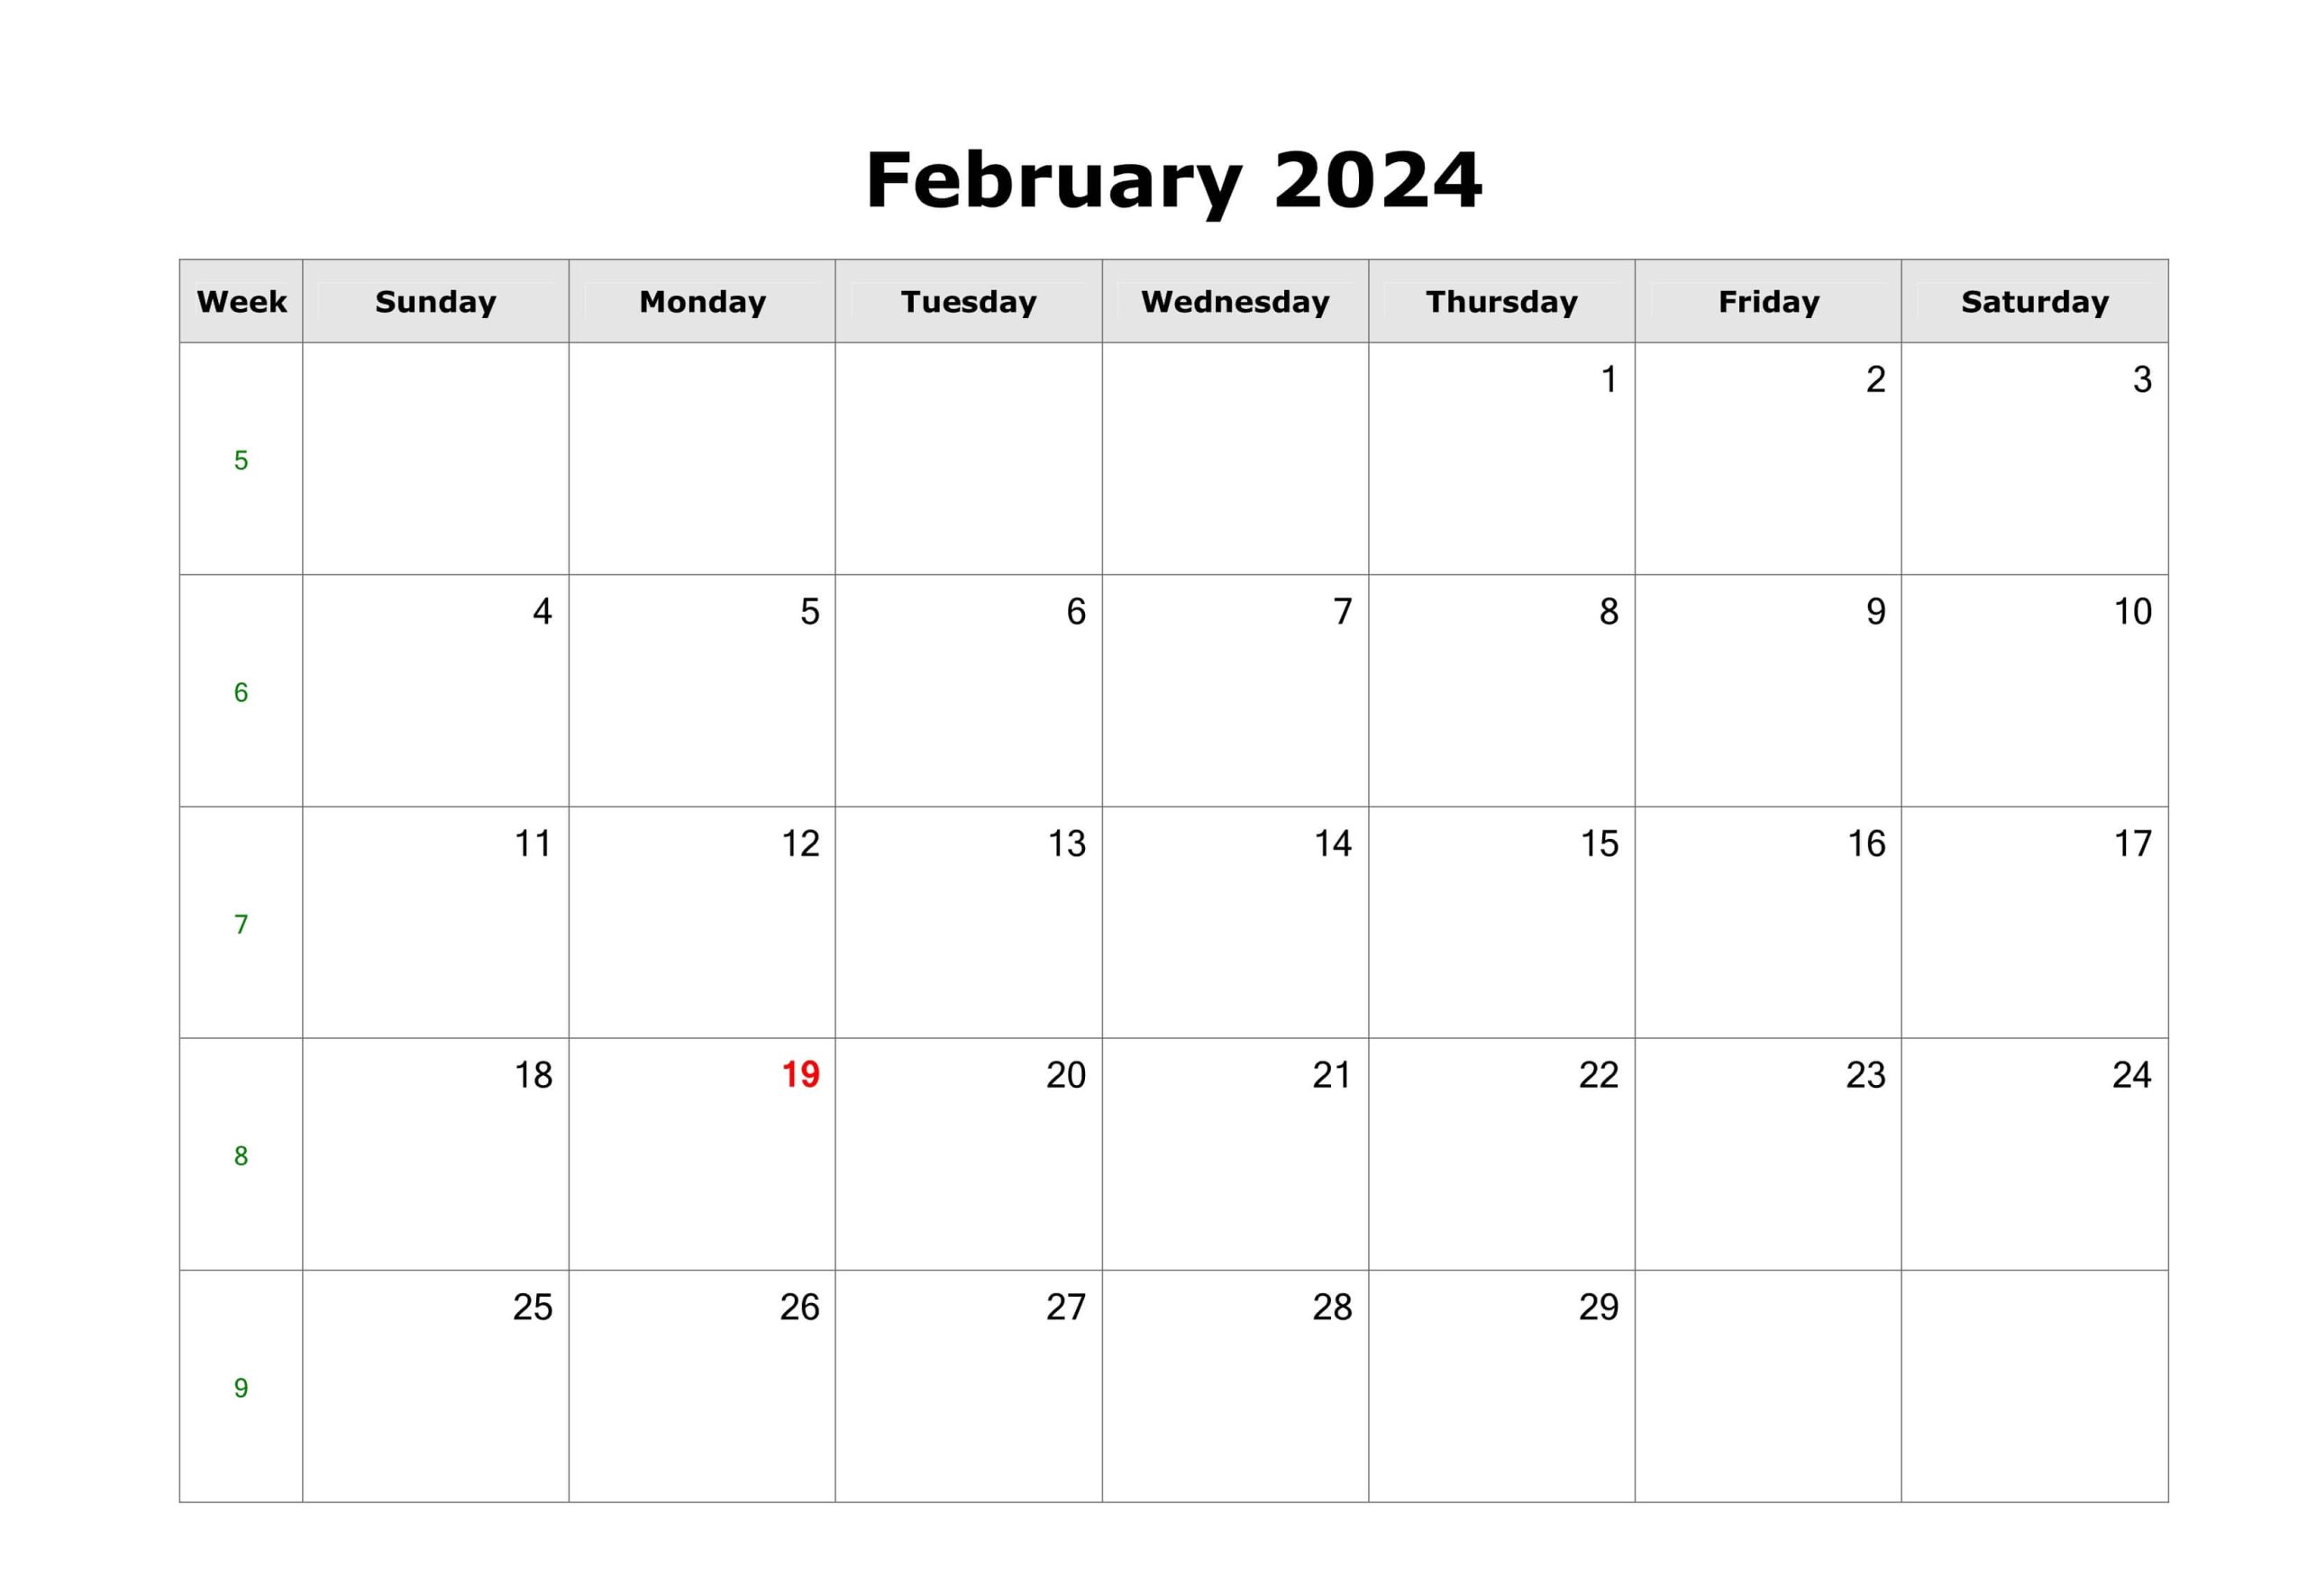 February 2024 Calendar Template Excel formats